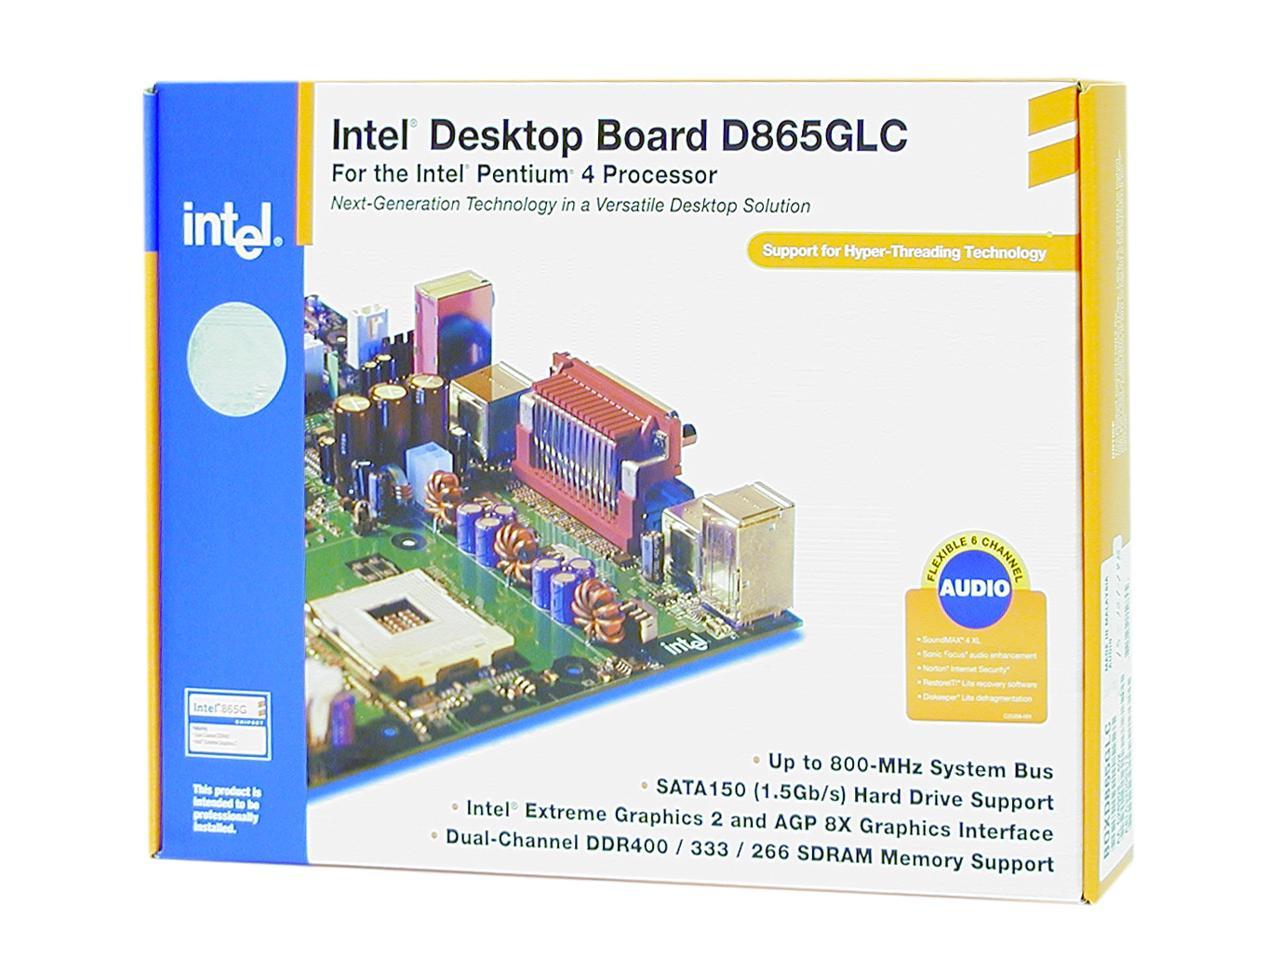 Audio & Gigabit LAN Intel D865GLCLK Intel 865G Socket 478 Micro-ATX Motherboard w/Video 